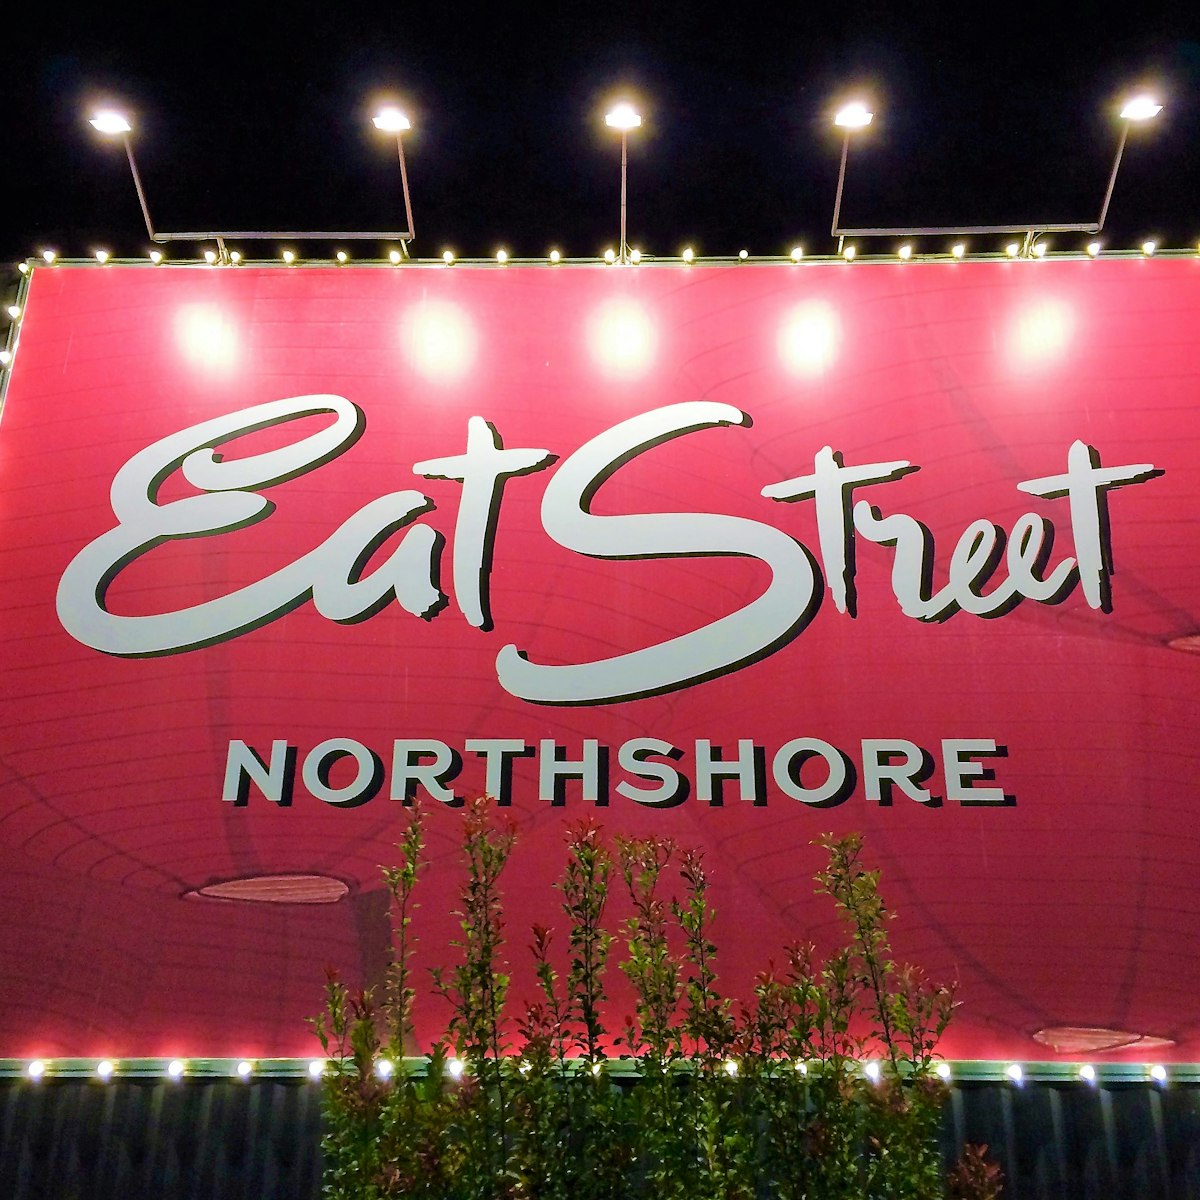 Eat Street Northshore